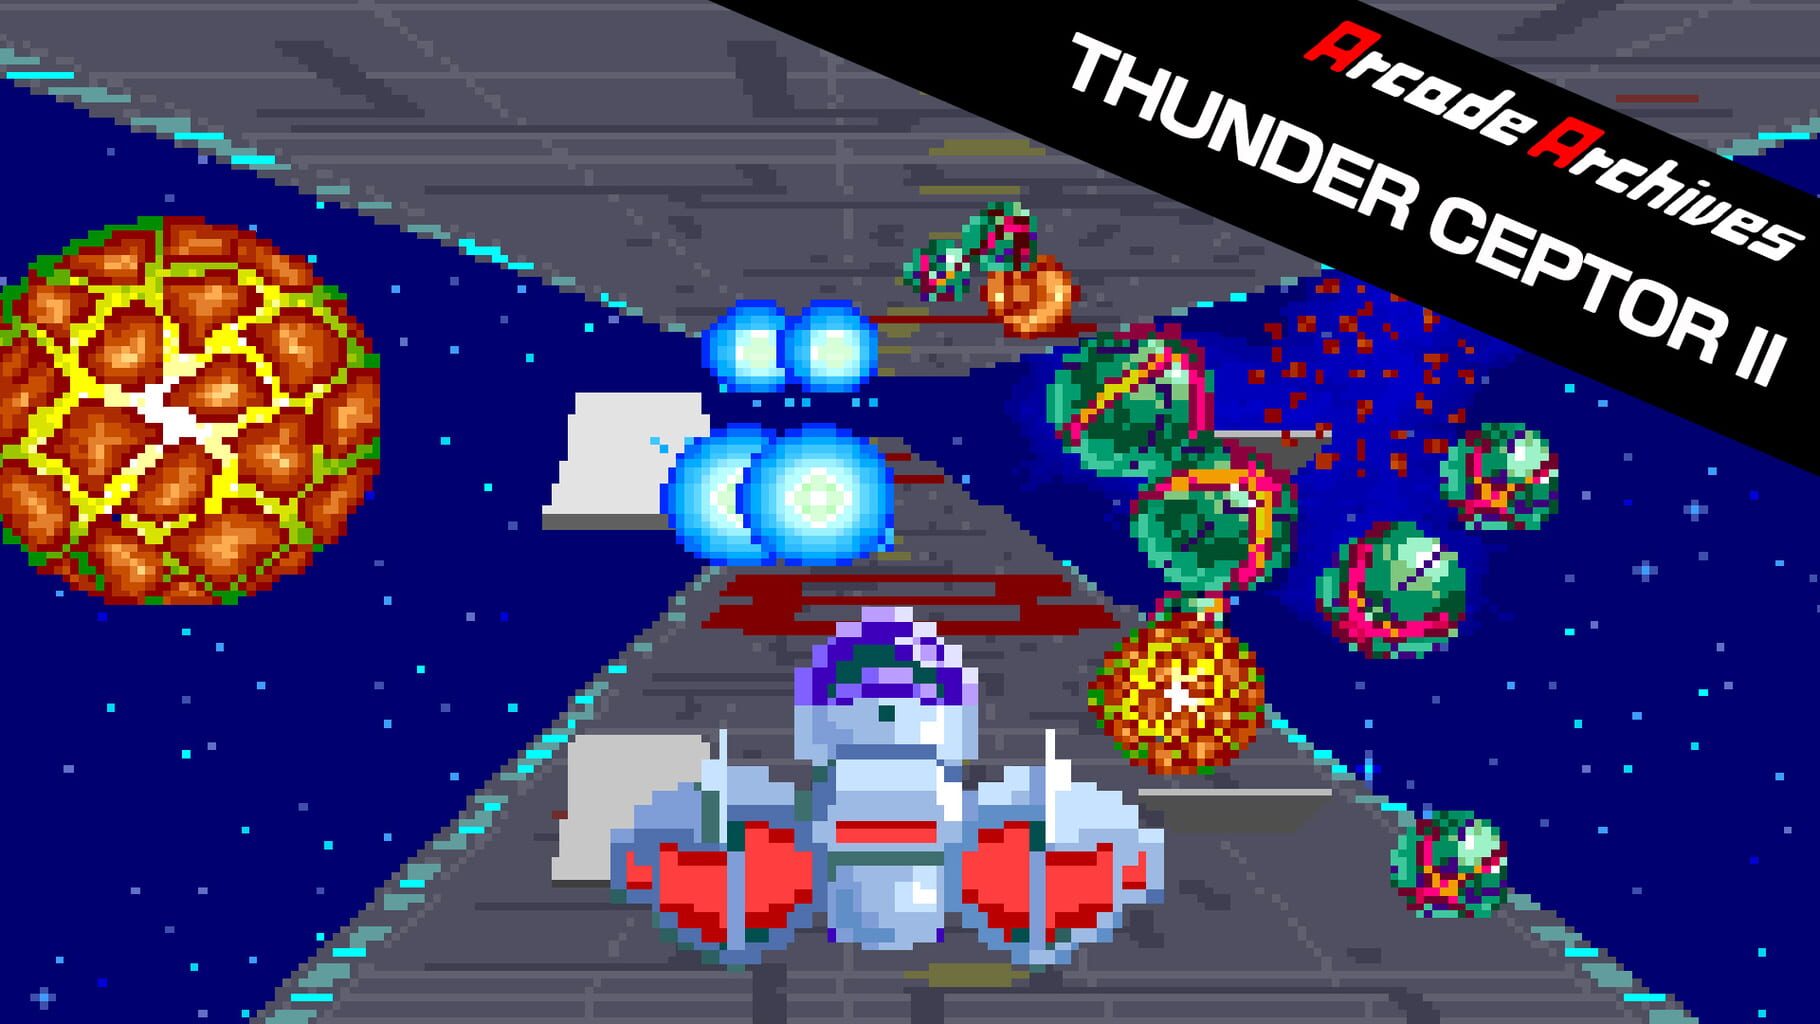 Arcade Archives: Thunder Ceptor II artwork